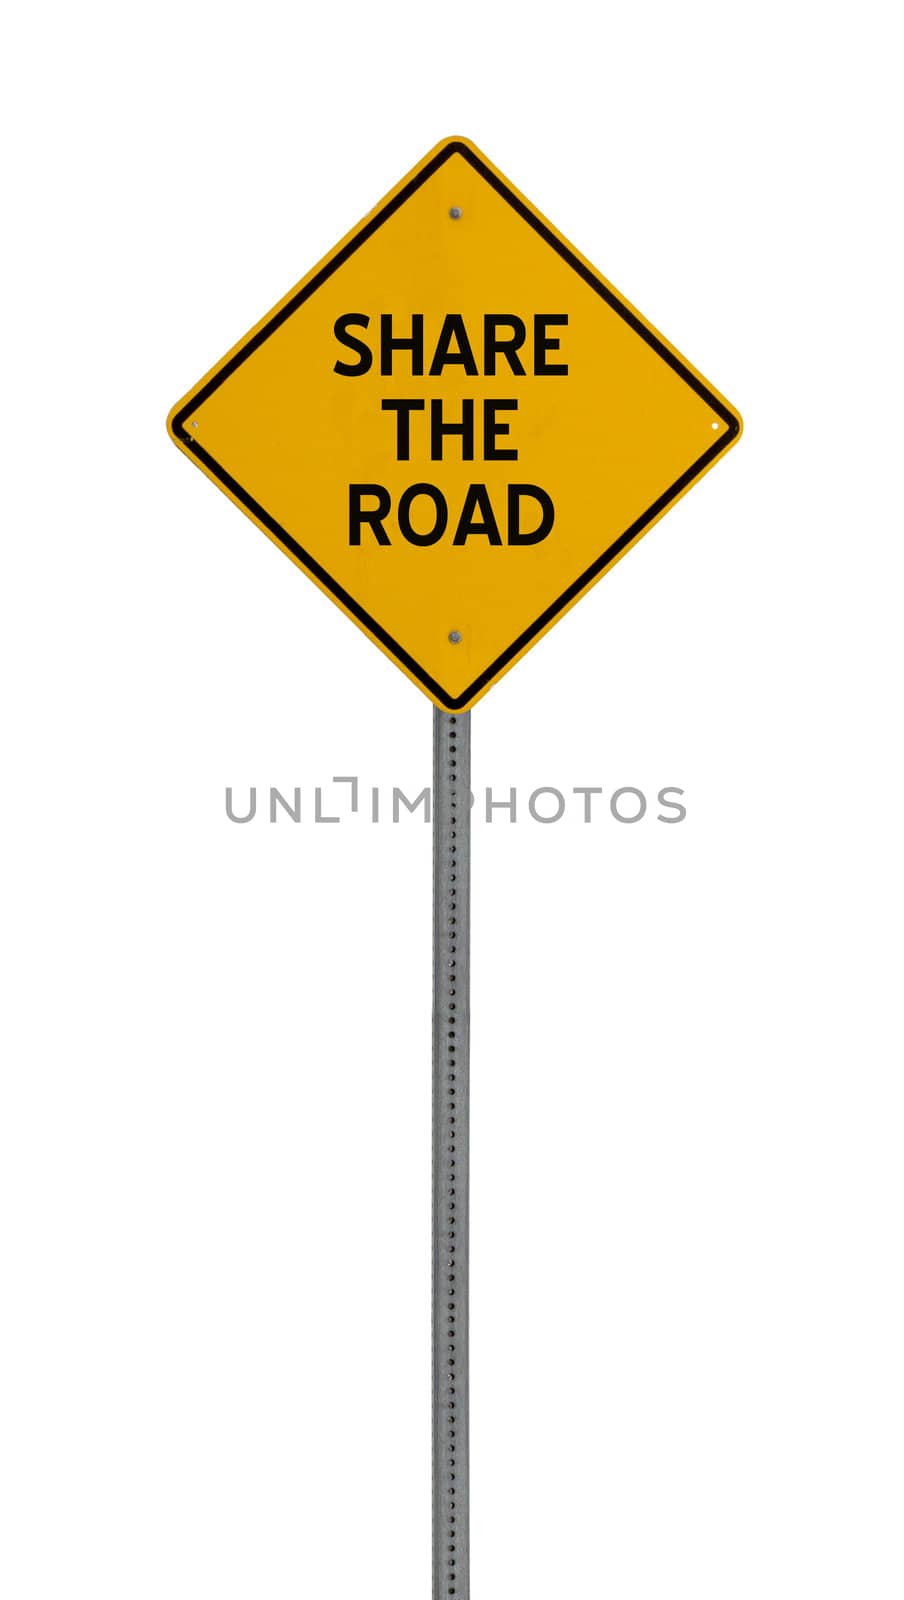 yellow road hazard sign